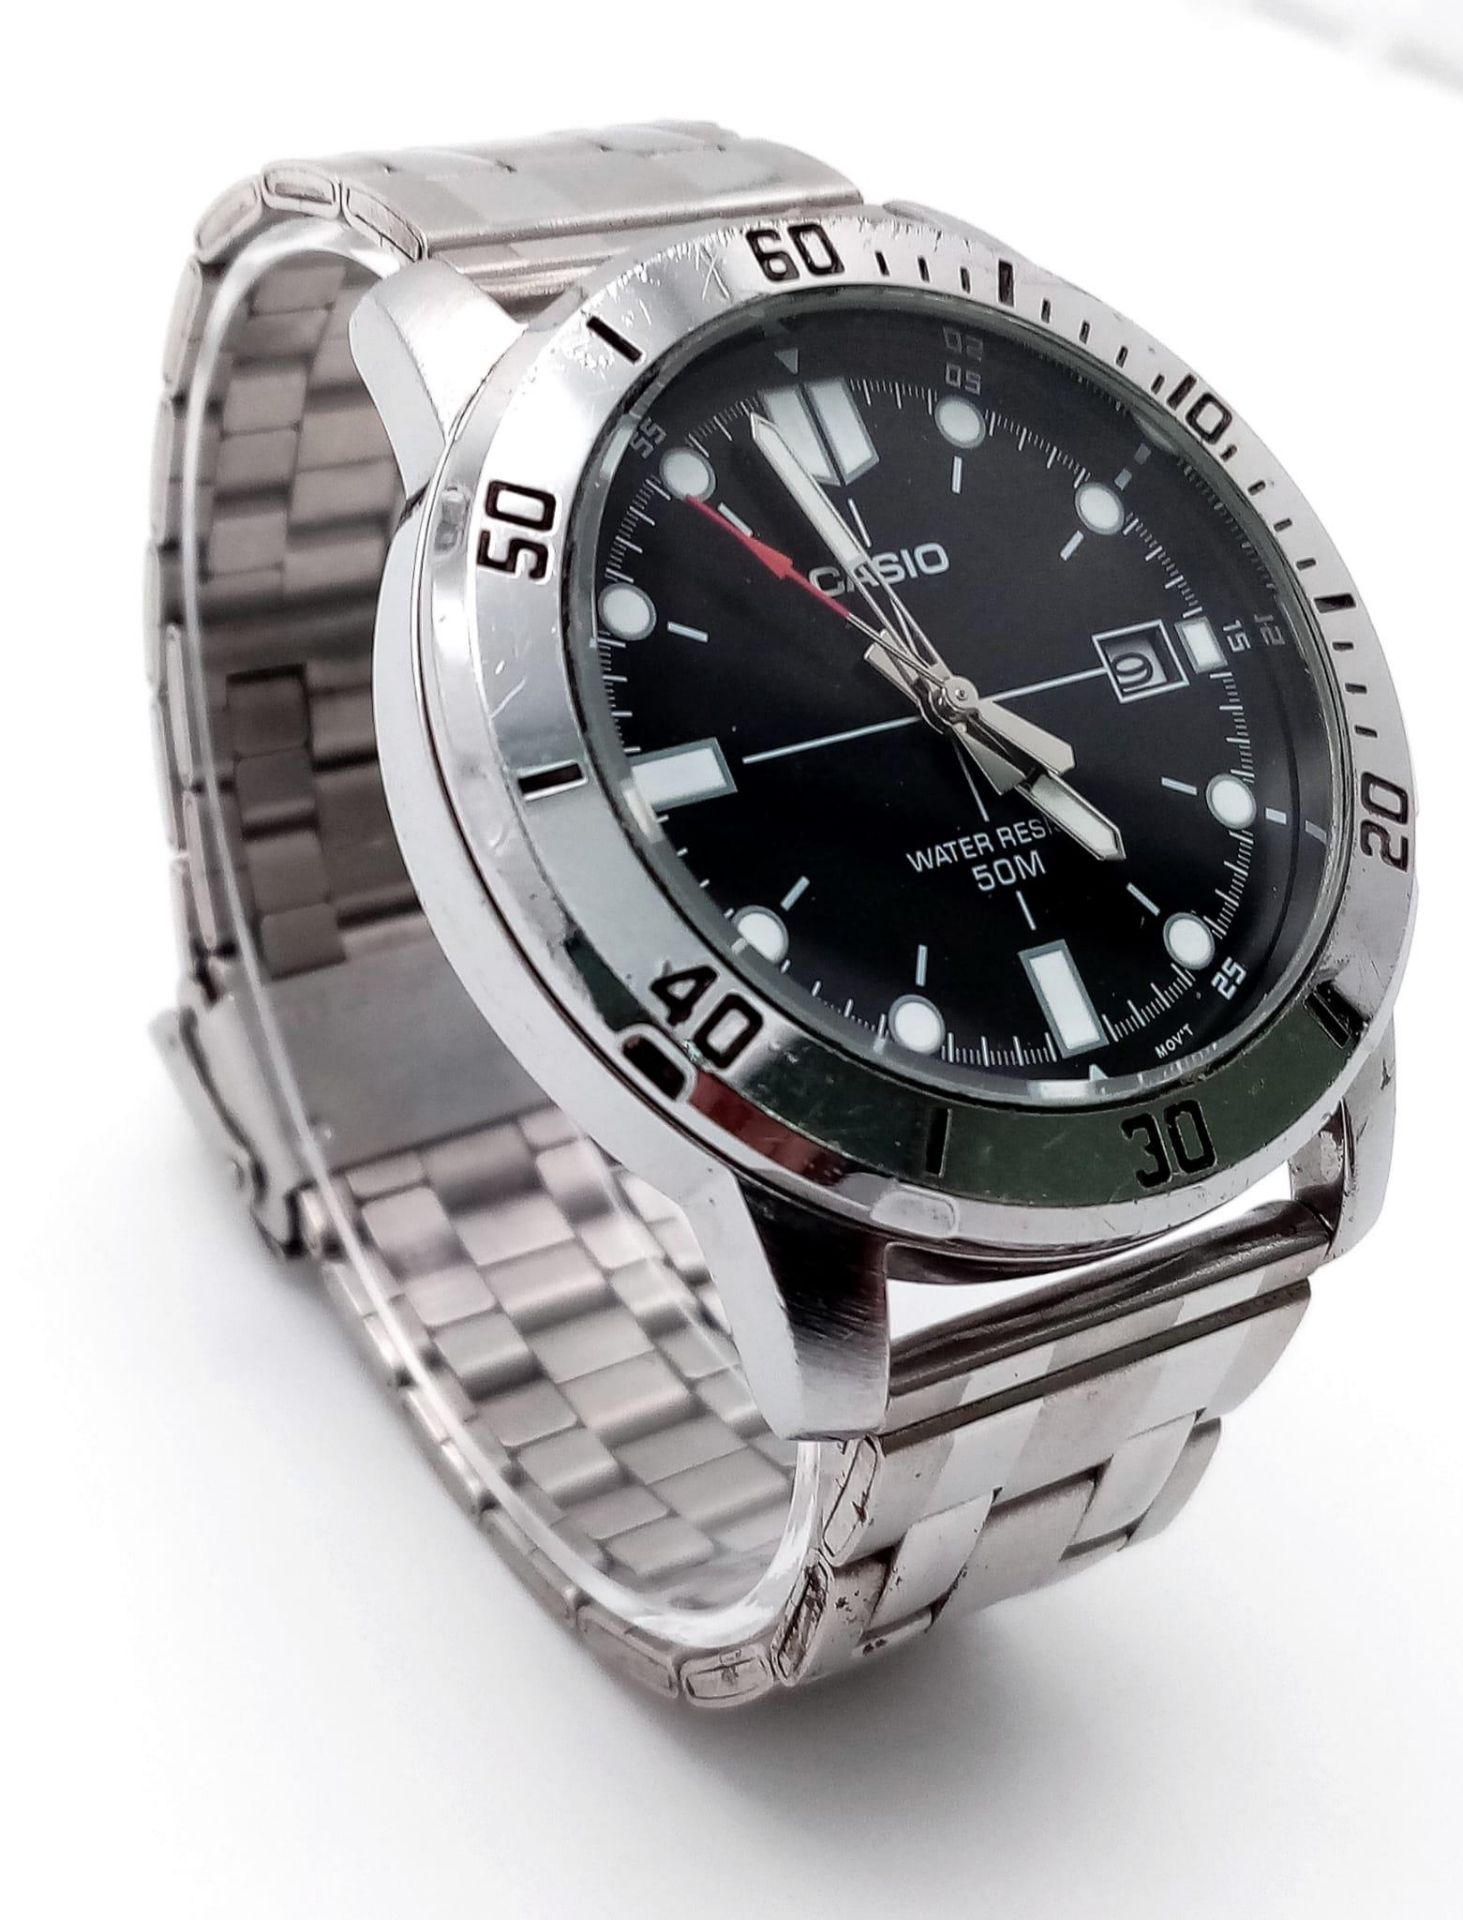 A Casio Quartz Gents Watch. Stainless steel bracelet and case - 44mm. Black dial with date window. - Bild 3 aus 6